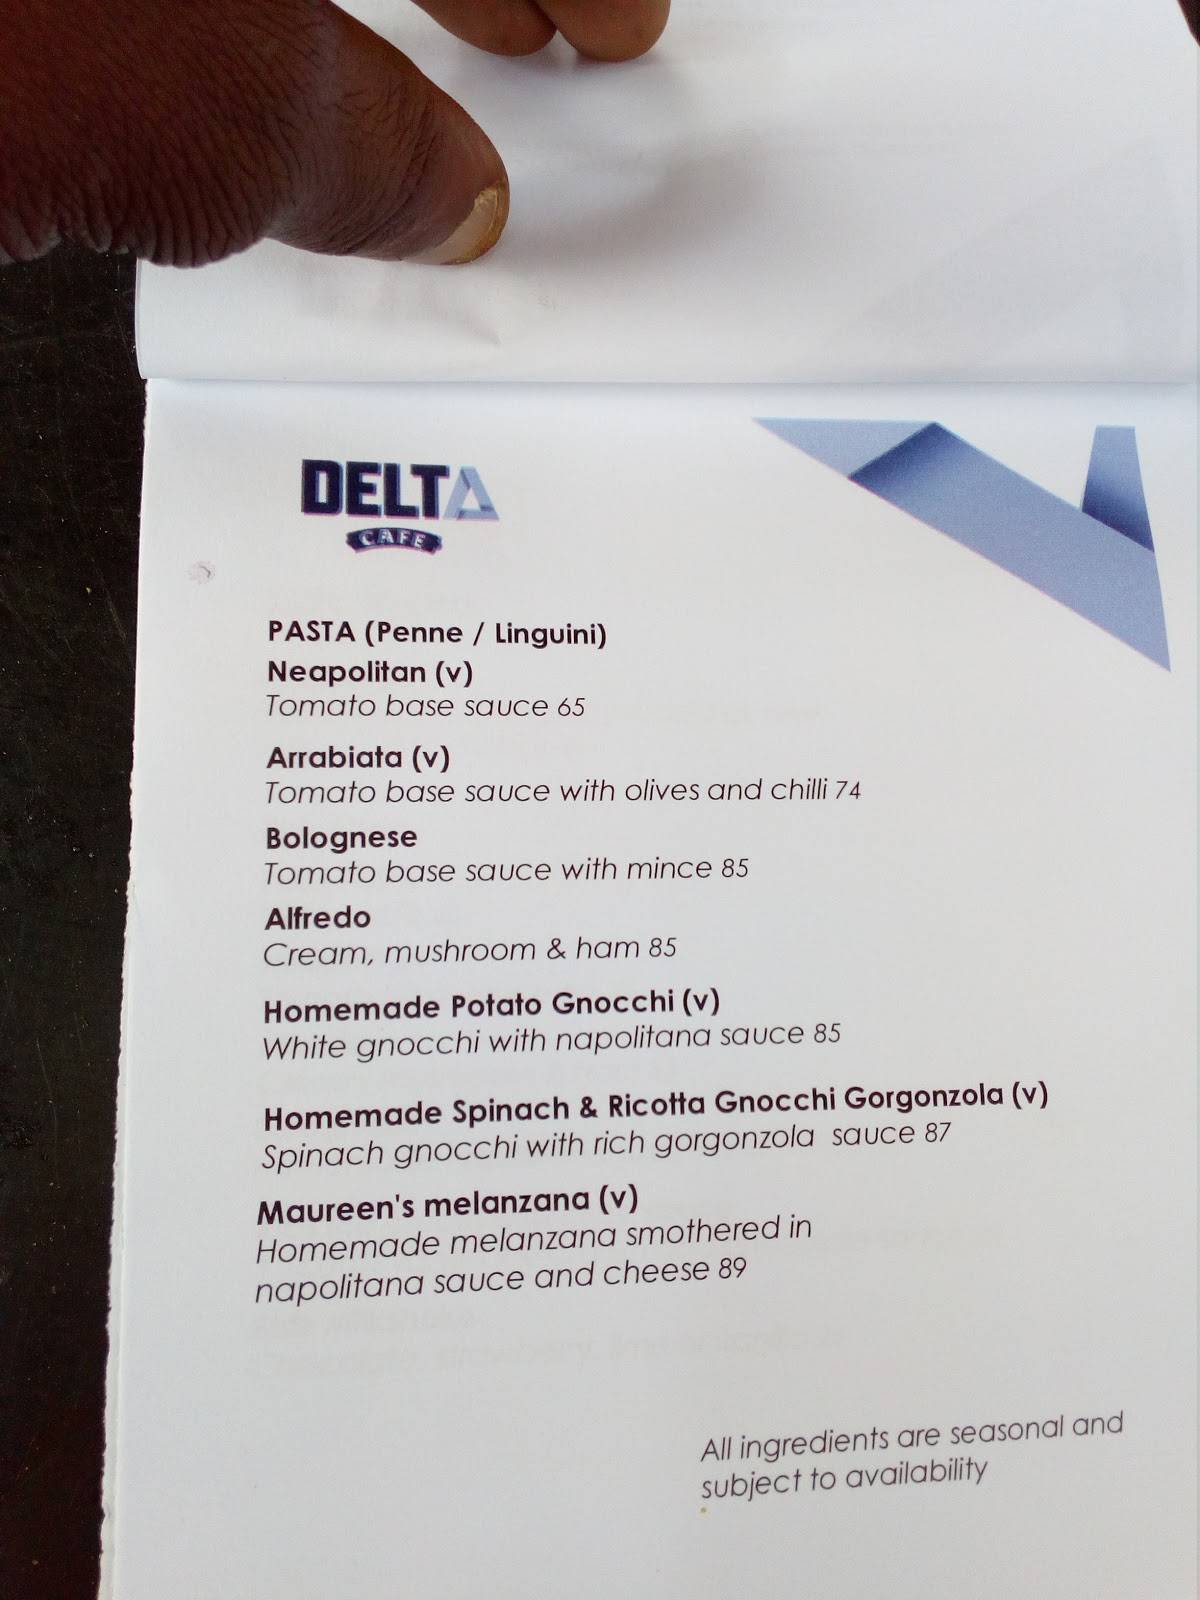 Don Quixote's menu will hit the spot after a stroll in Joburg's Delta Park